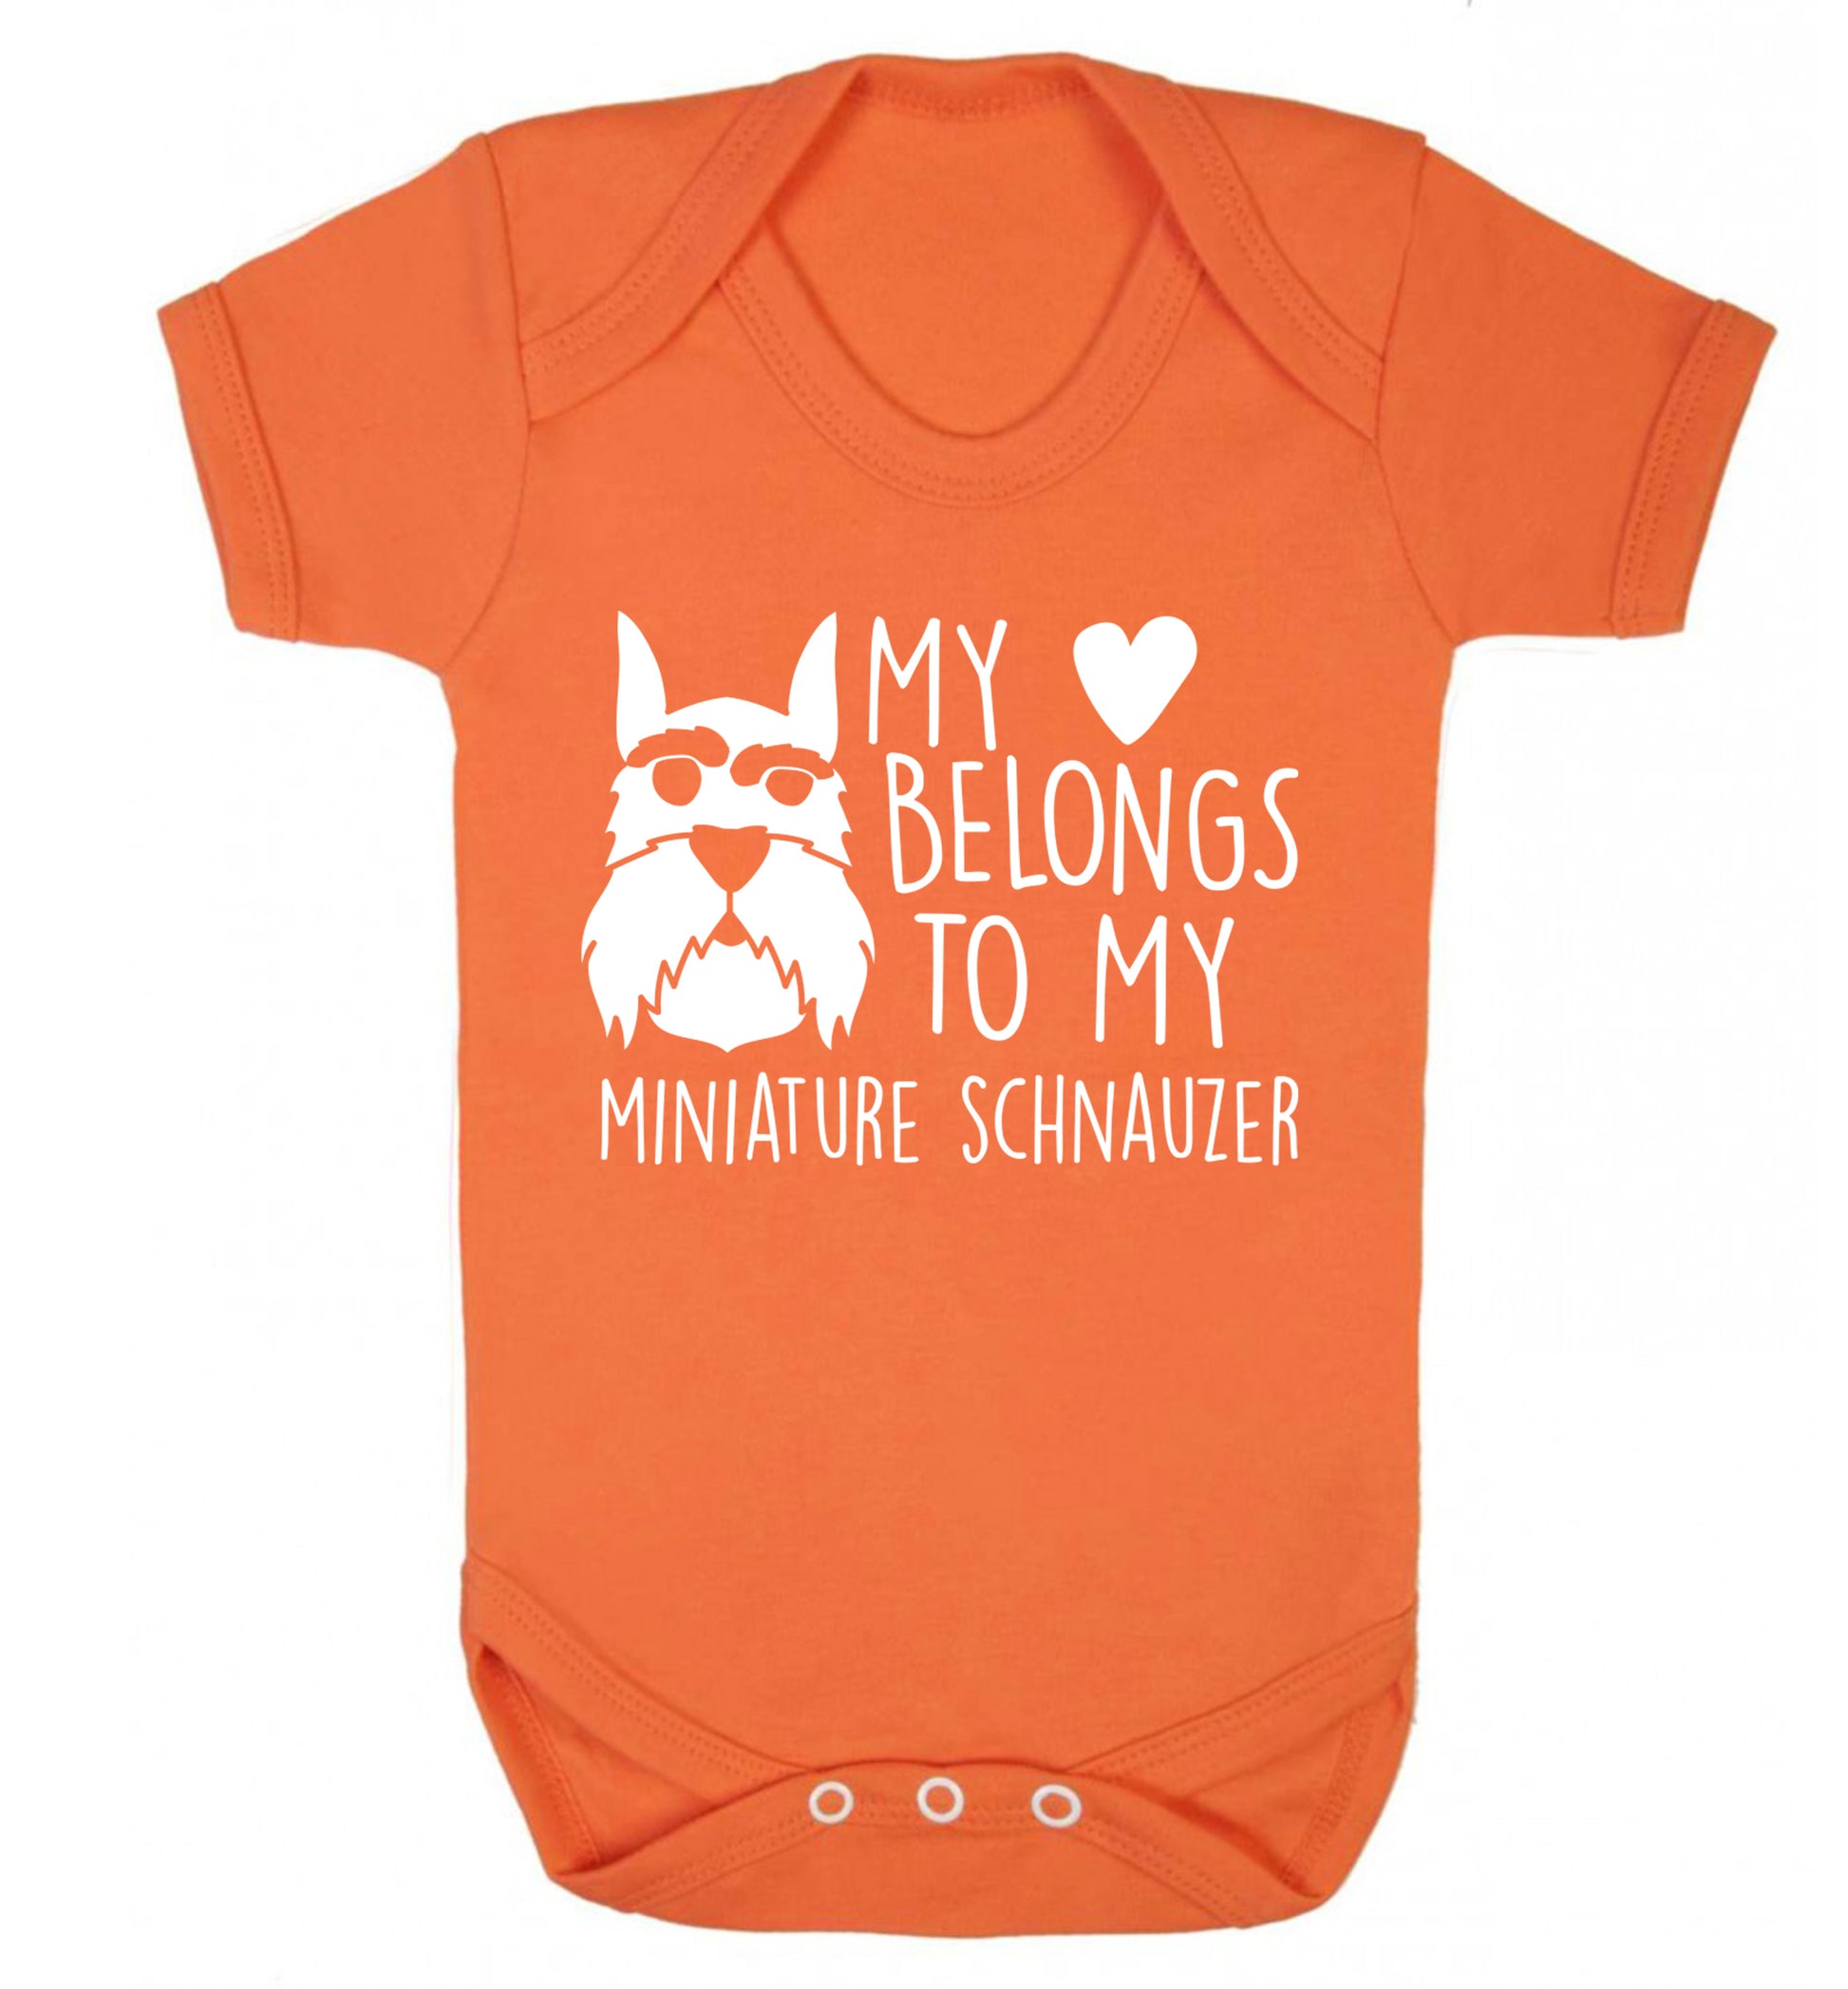 My heart belongs to my miniature schnauzer Baby Vest orange 18-24 months